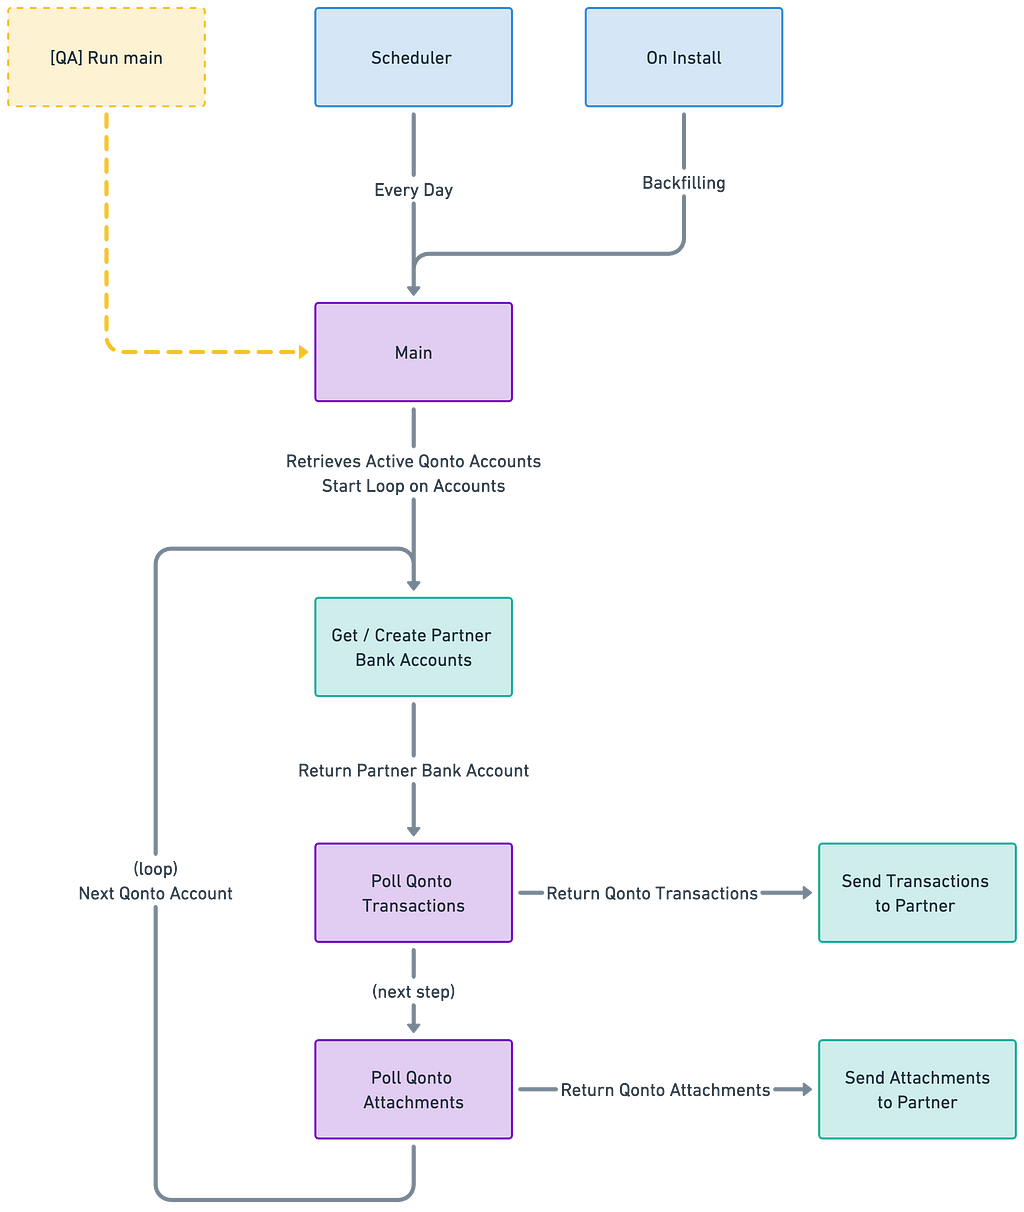 LexOffice flow chart representing dependencies between workflows.